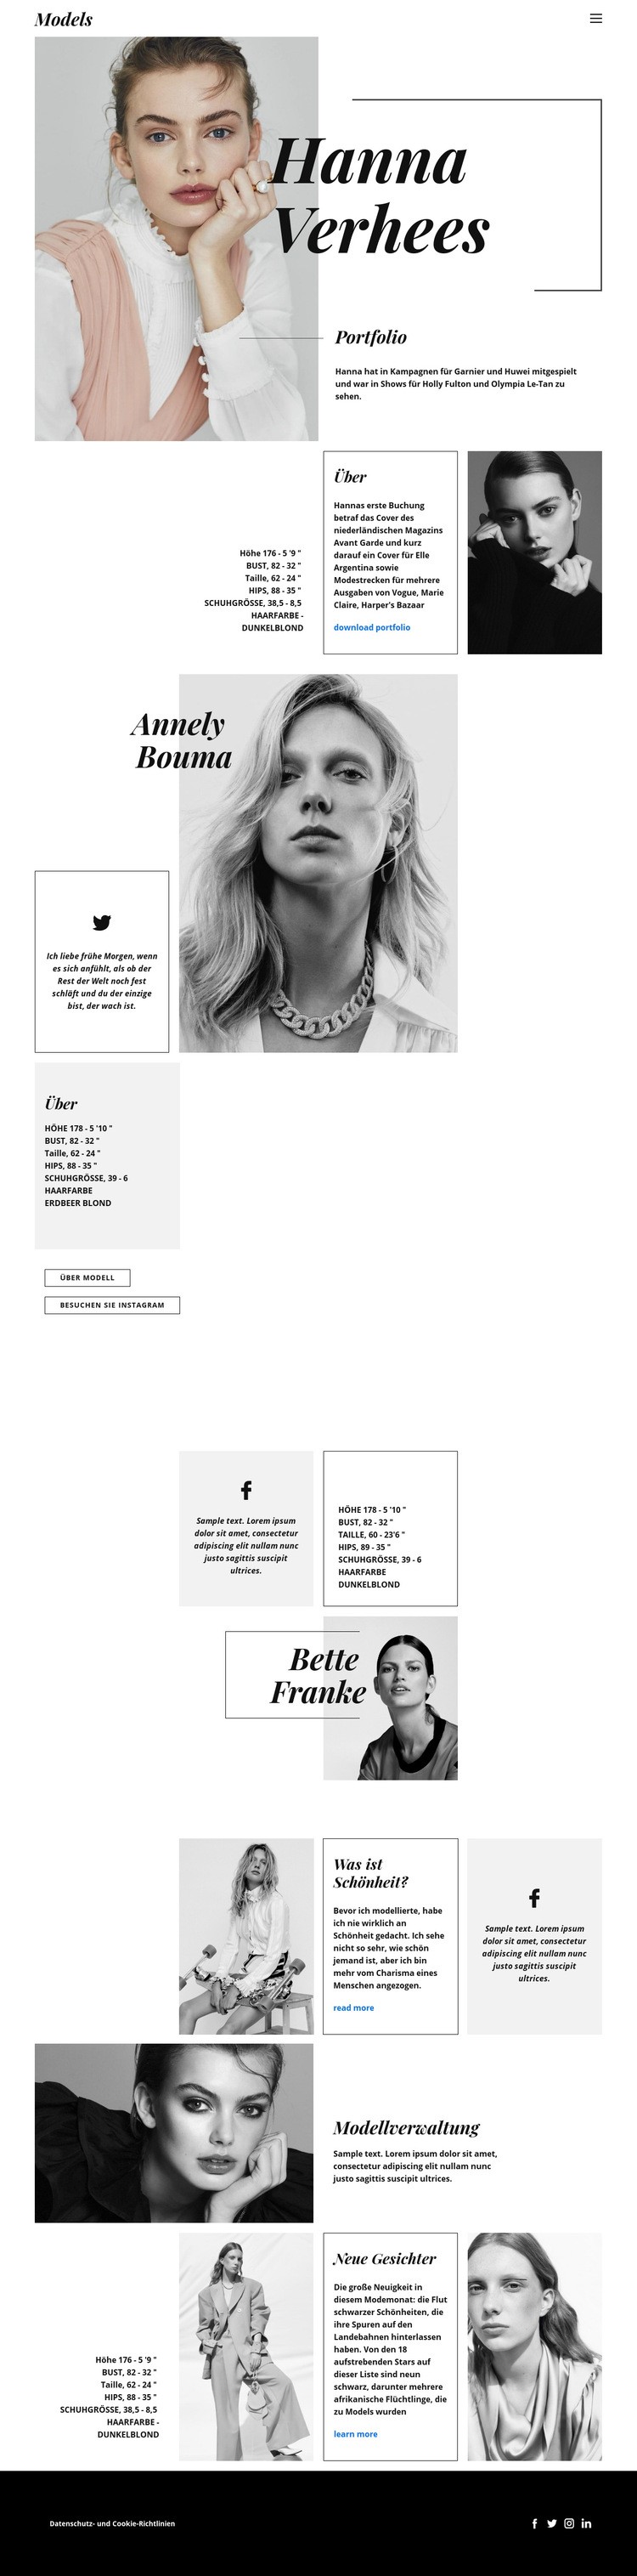 Hanna Verhees Blog Website design